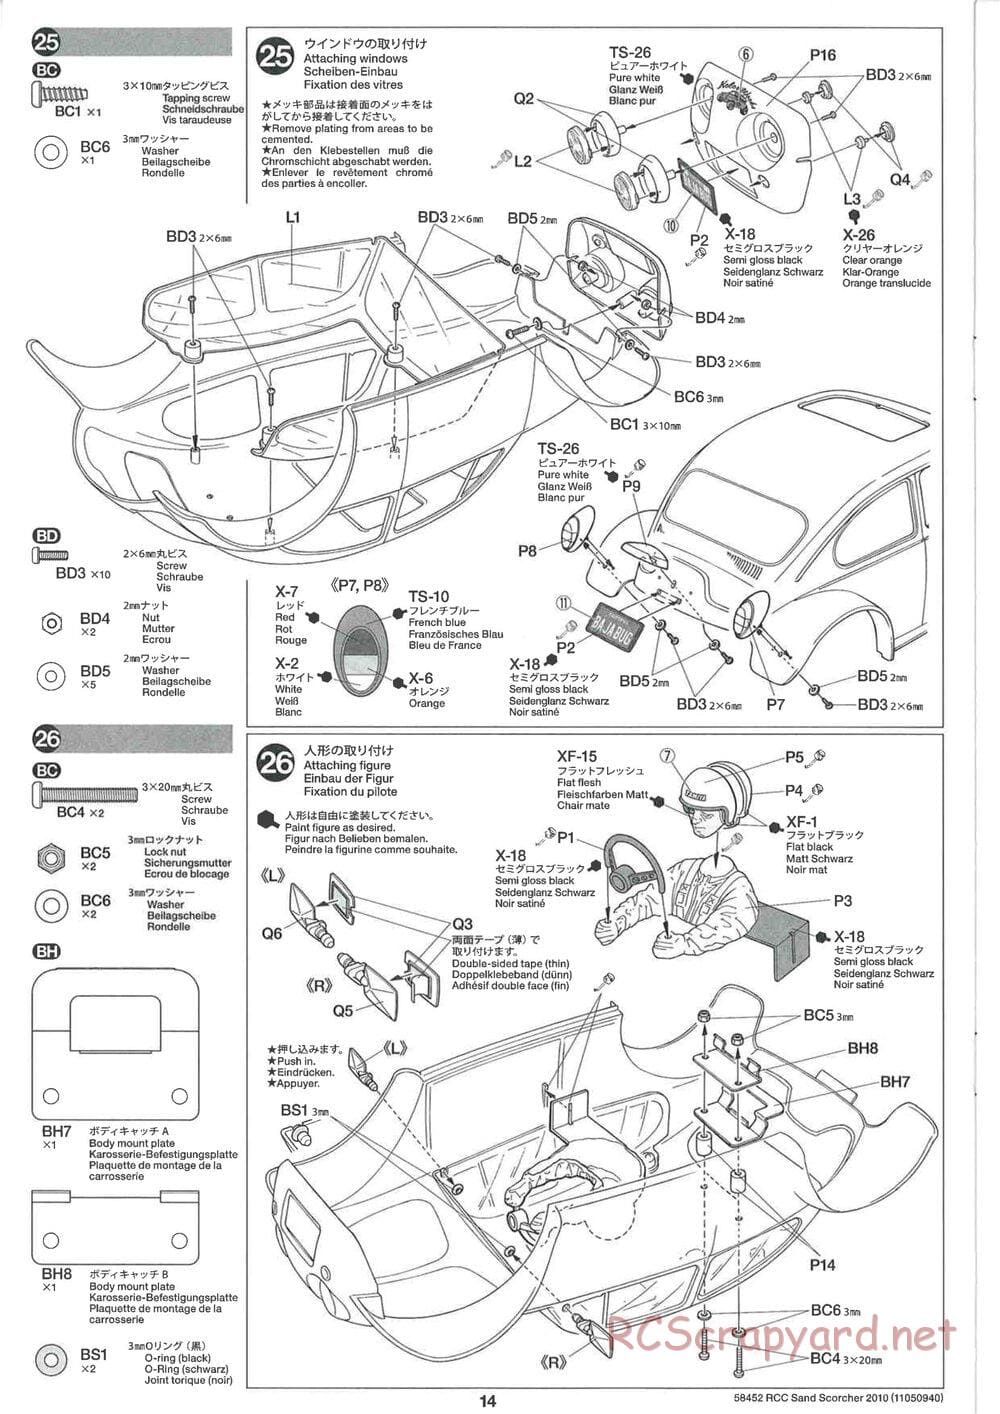 Tamiya - Sand Scorcher 2010 - SRB v1 Chassis - Manual - Page 14